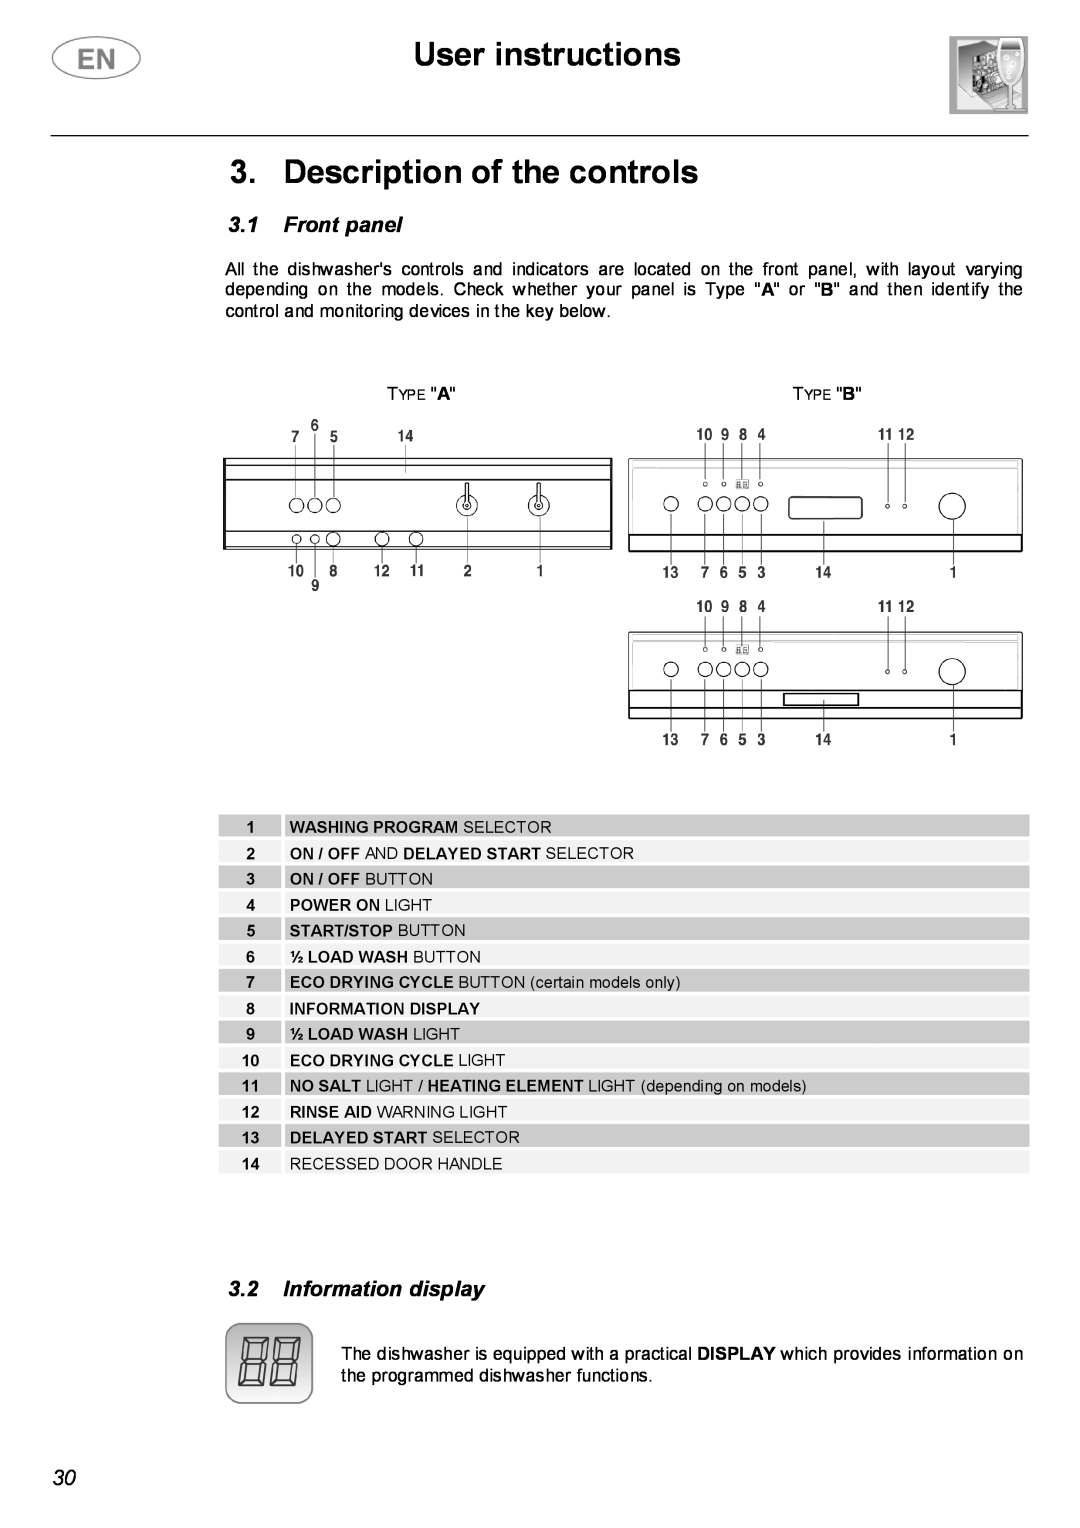 Smeg PL19K instruction manual User instructions 3. Description of the controls, Front panel, Information display 